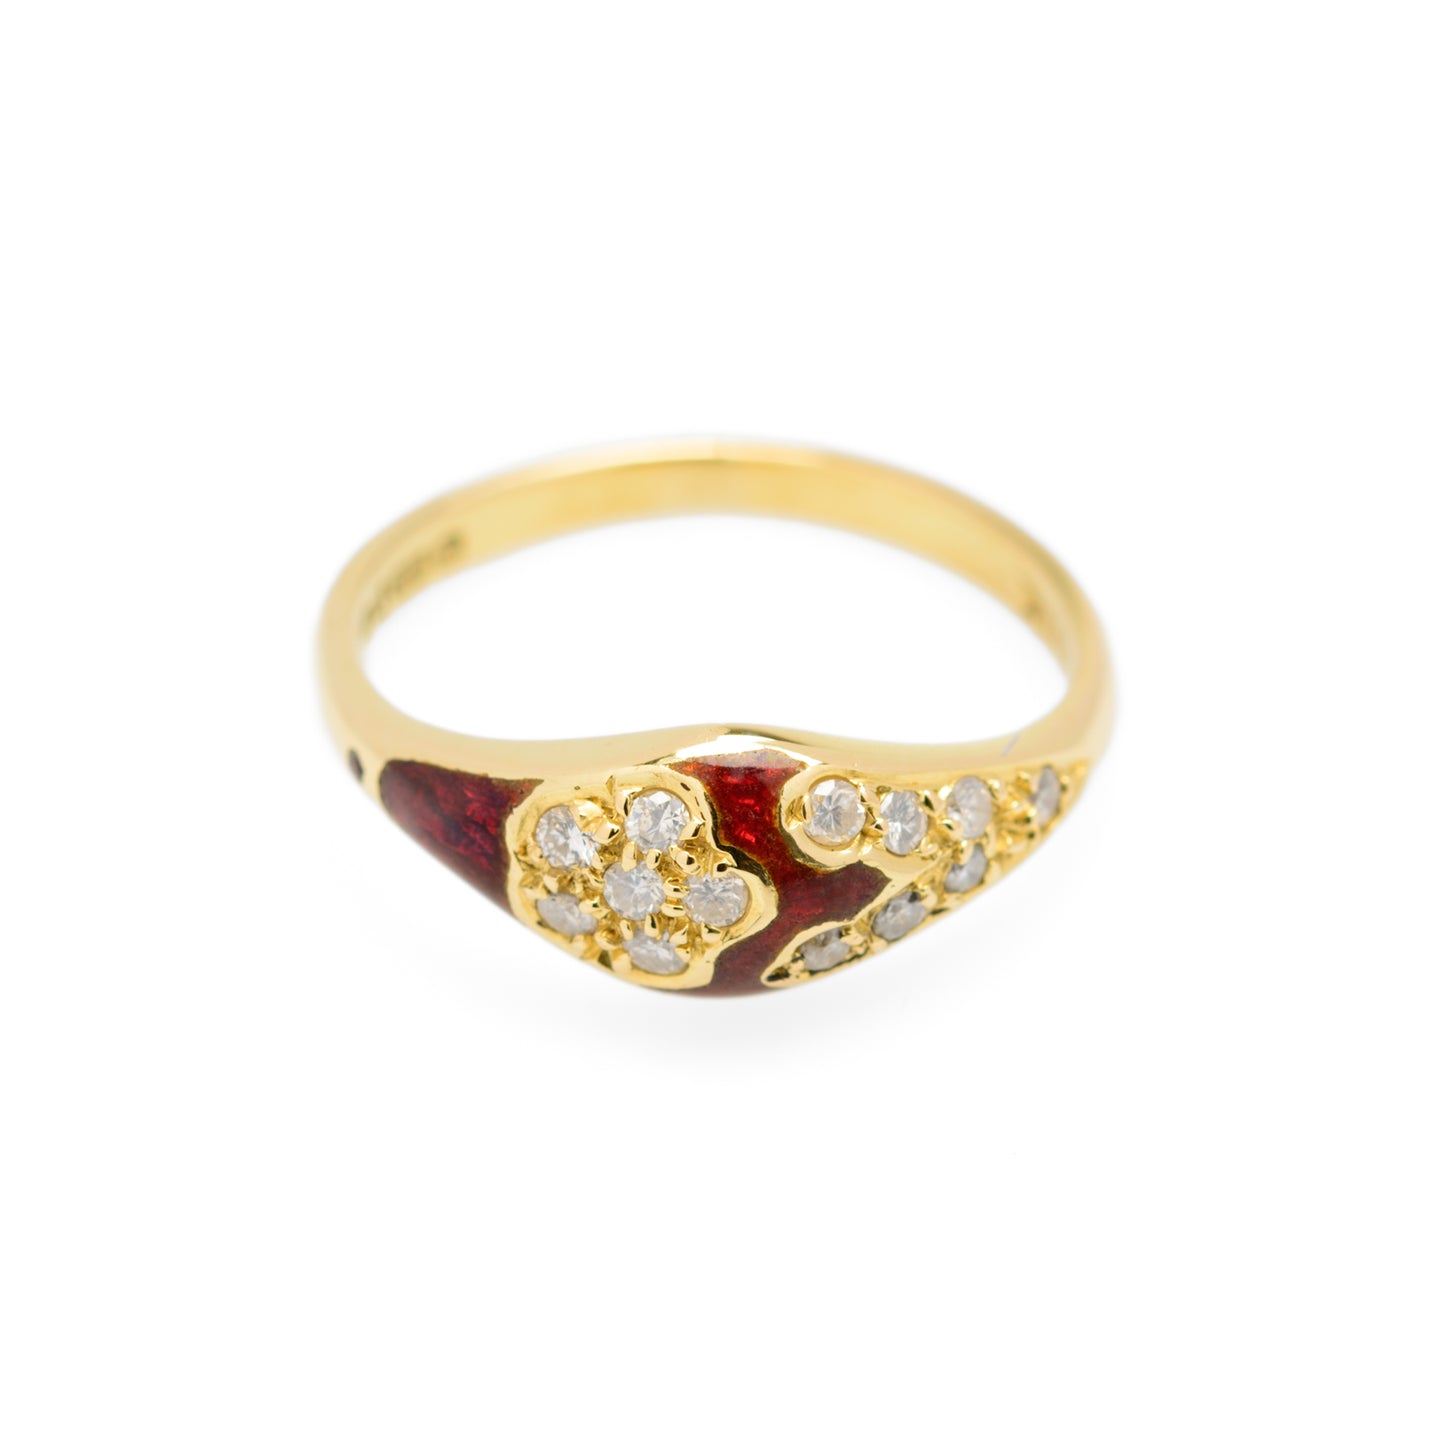 Vintage 18ct Gold Diamond & Red Enamel Elegant Ladies Ring Size L  (Code A854)